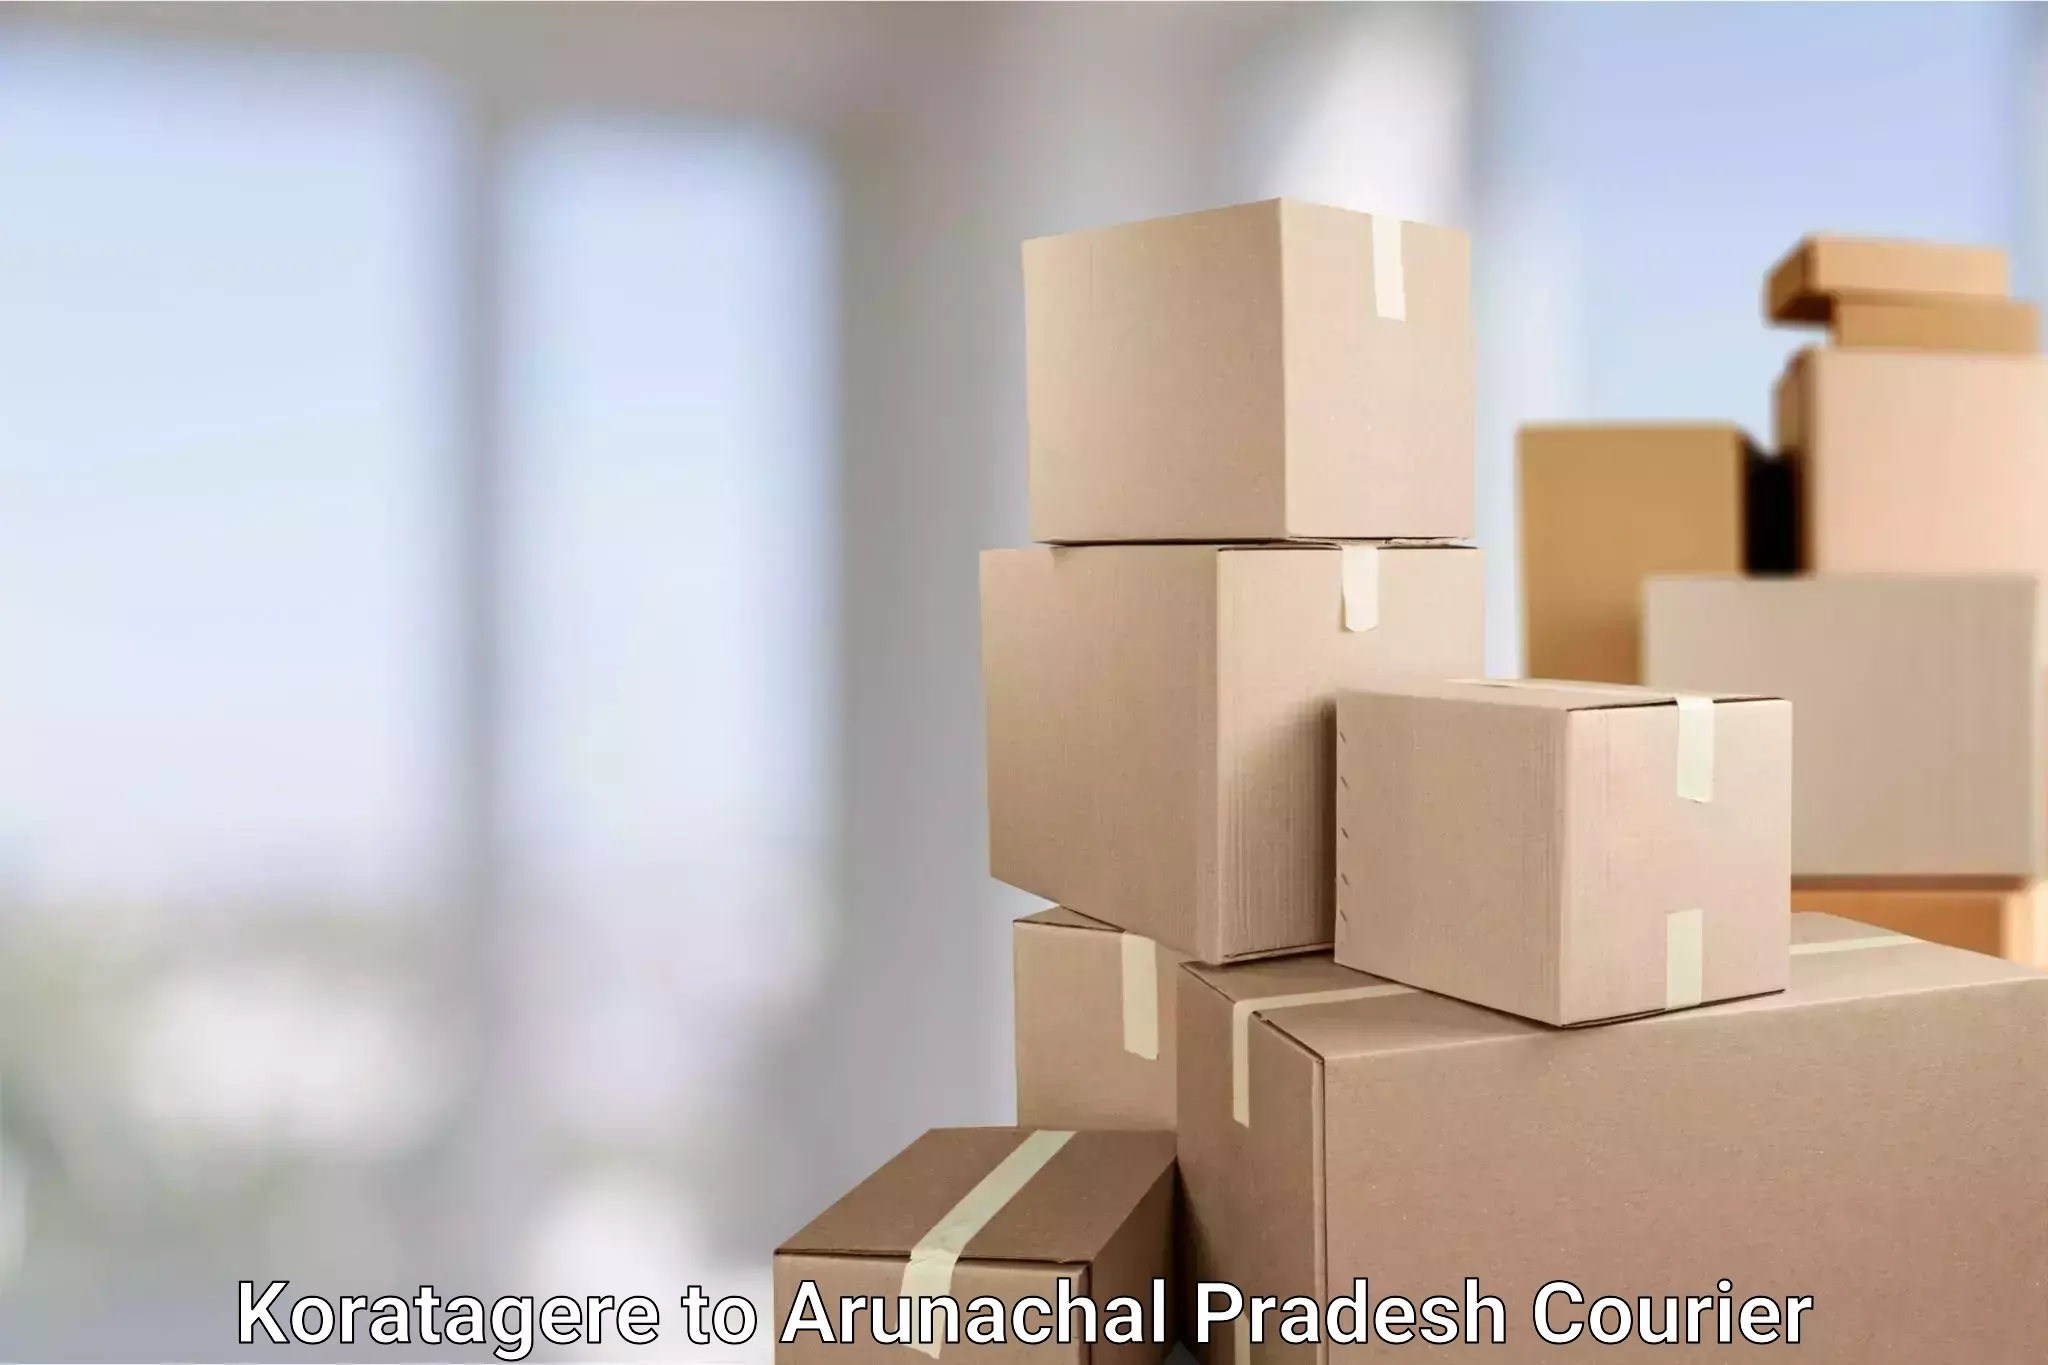 On-demand delivery Koratagere to Arunachal Pradesh